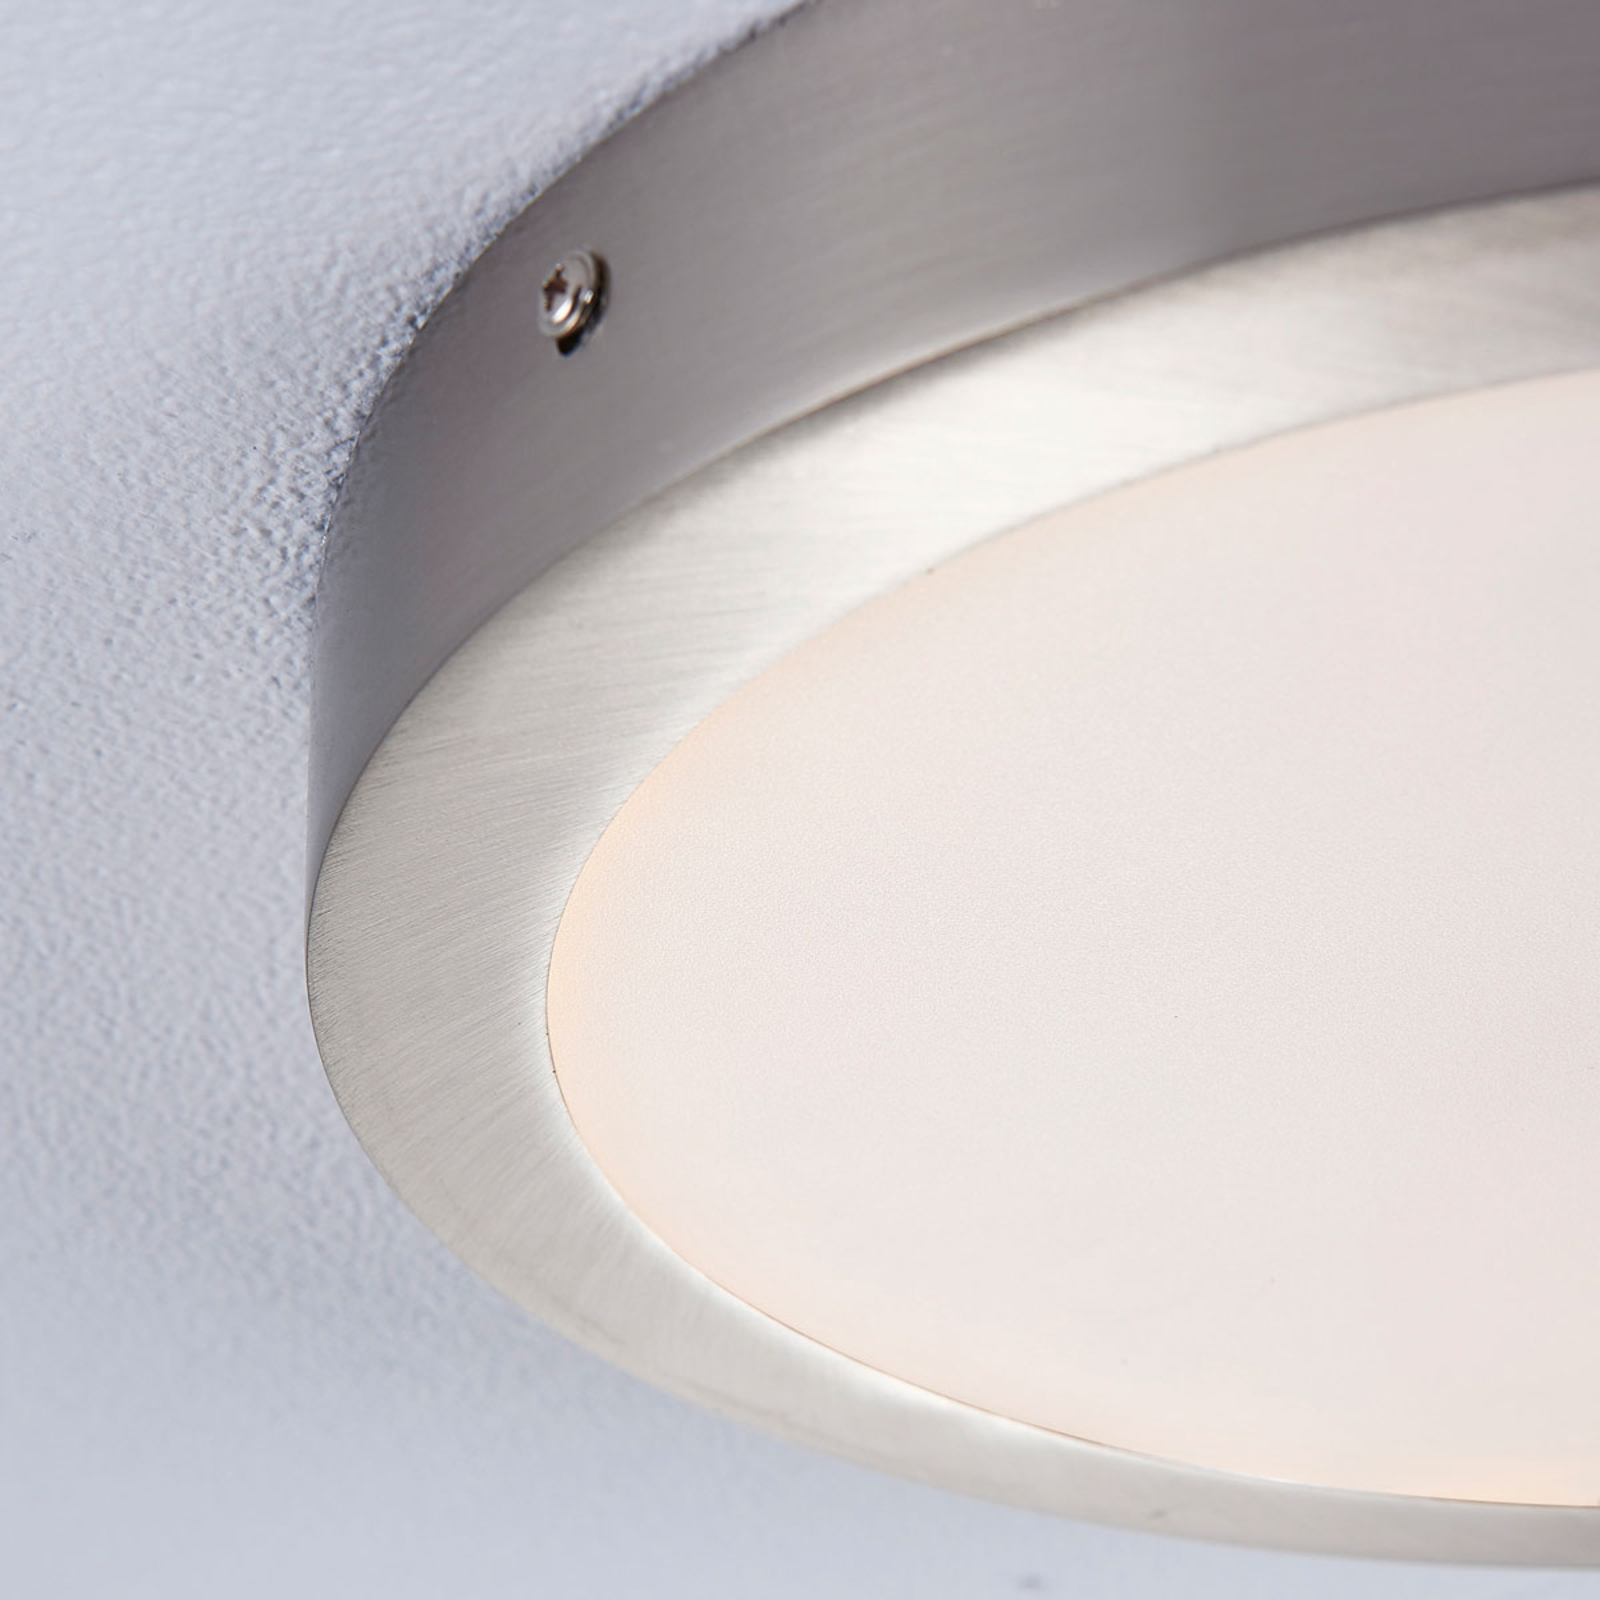 Milea - LED plafondlamp in ronde vorm